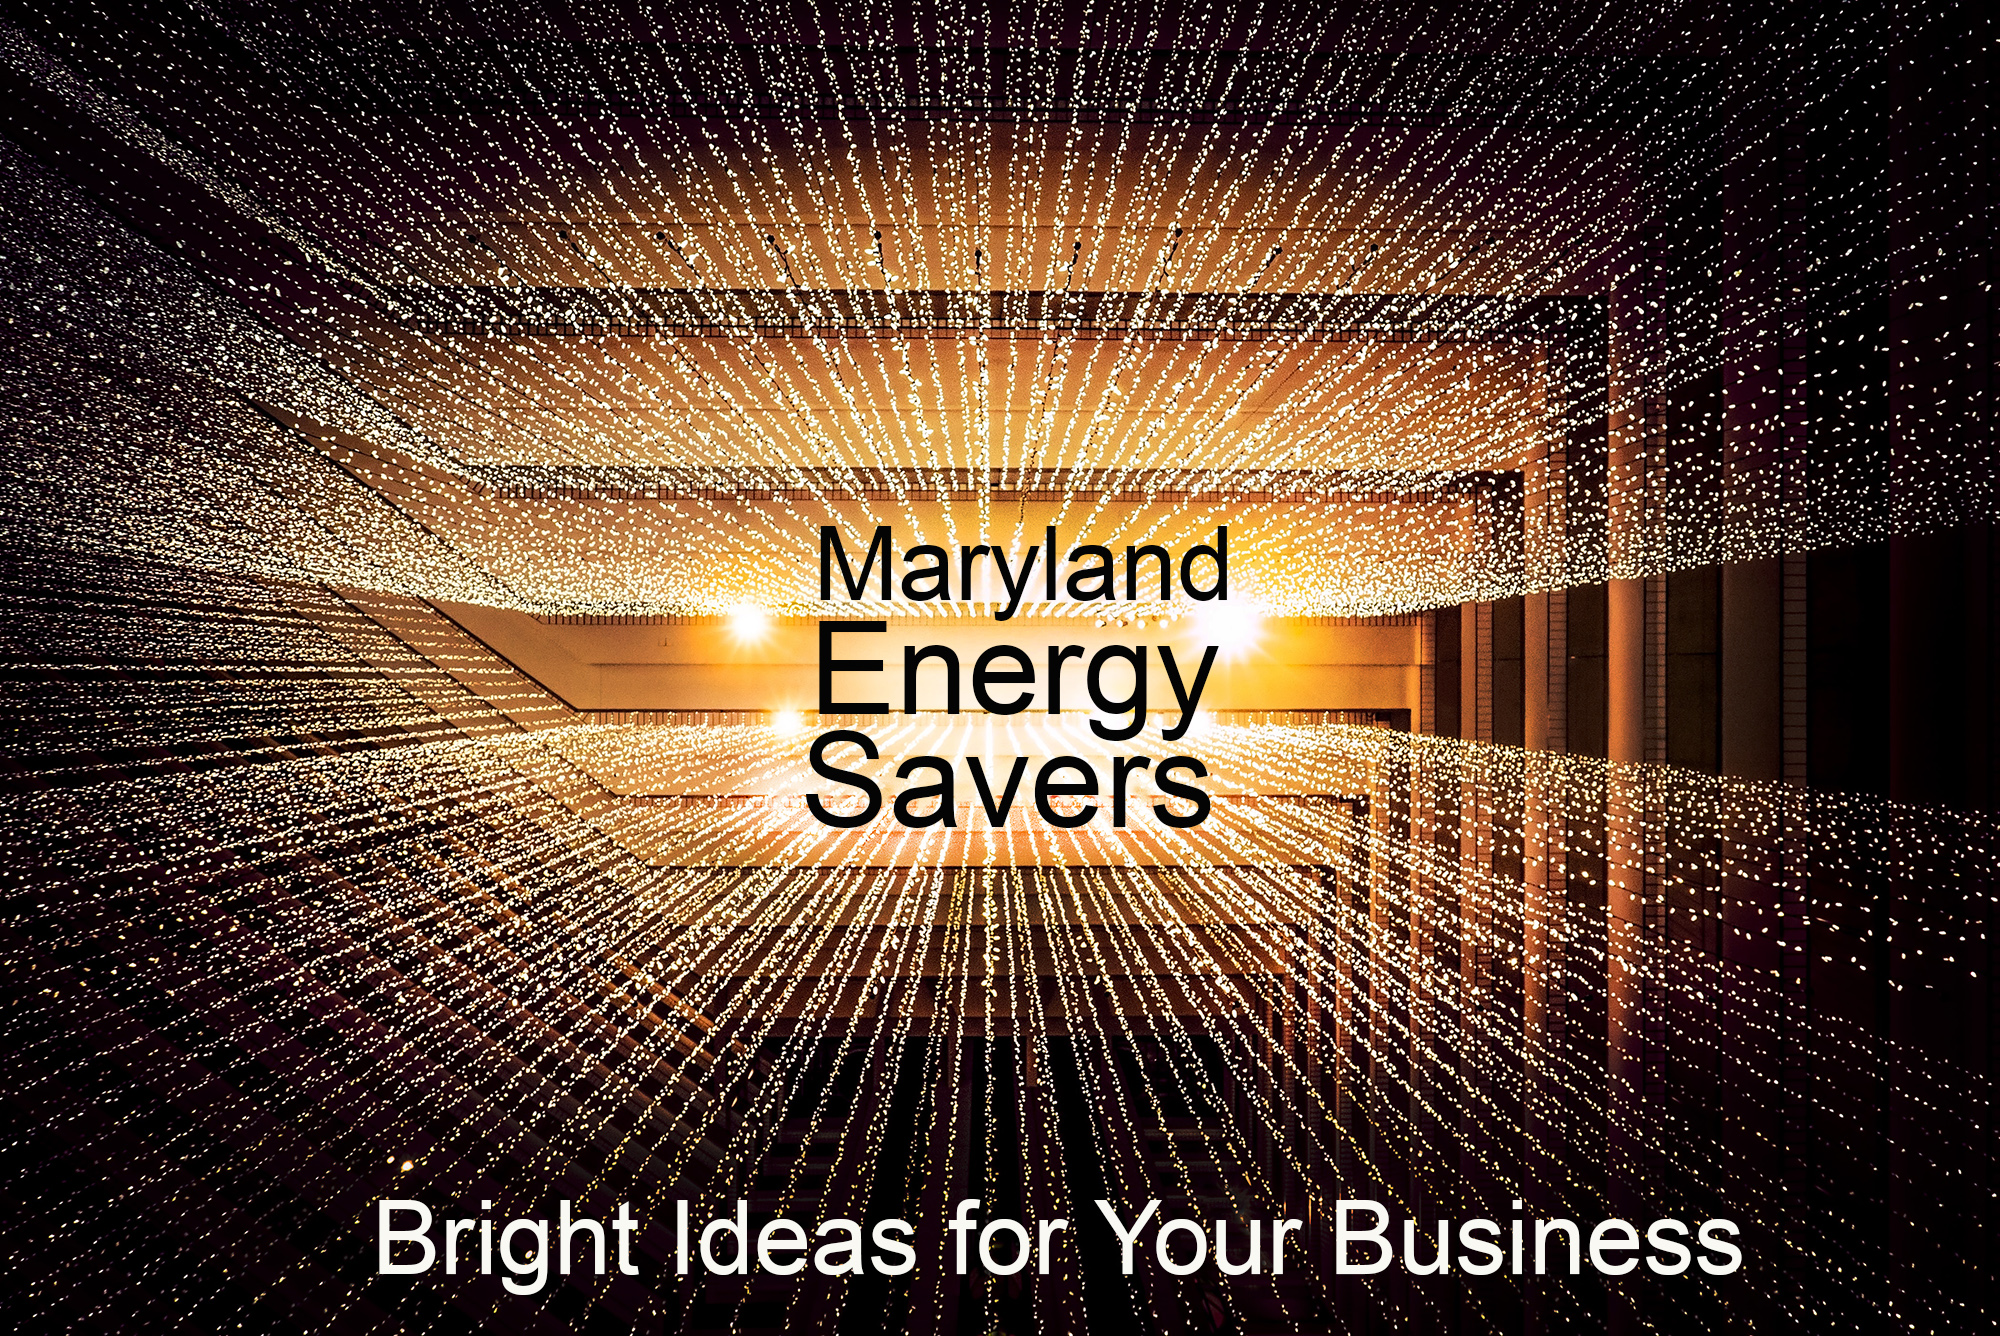 Maryland Energy Savers home page